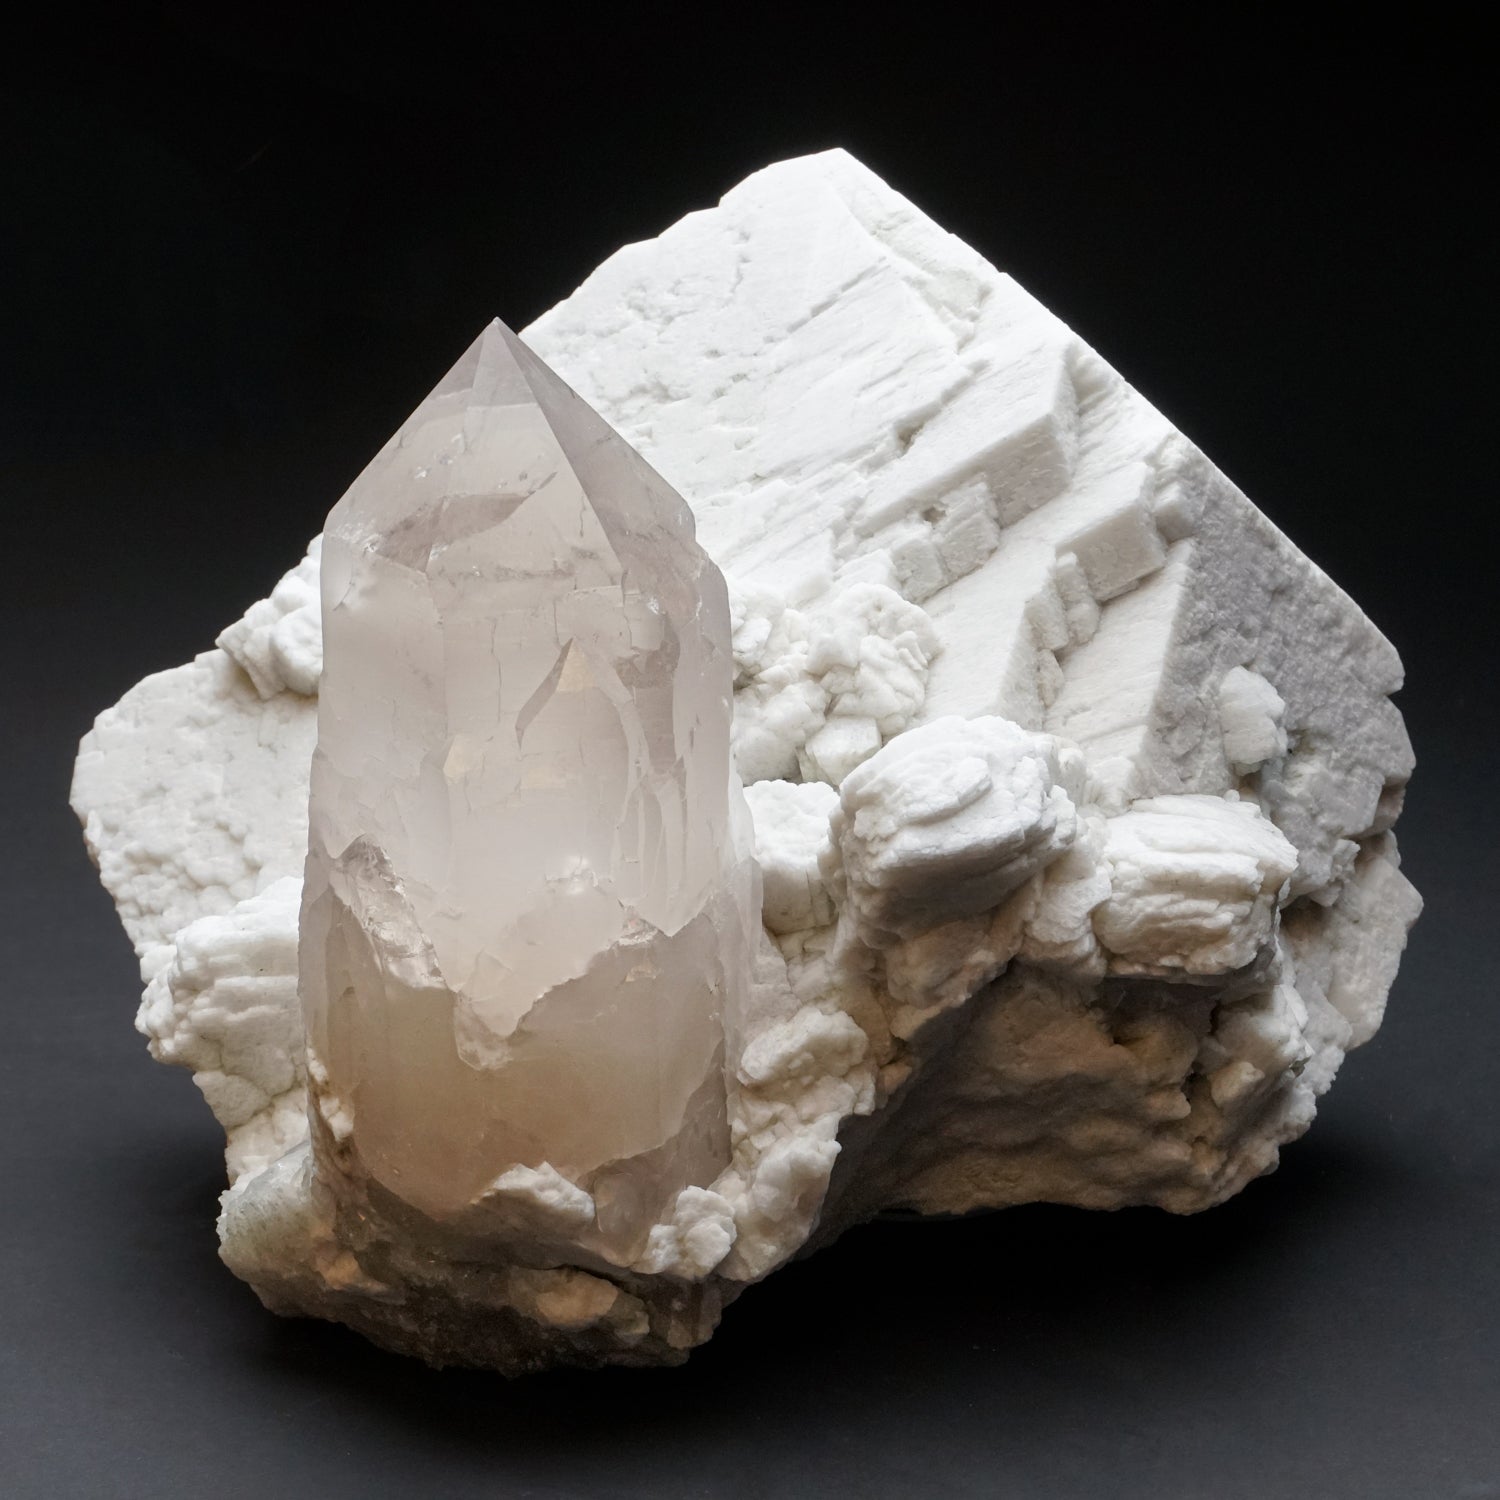 Quartz Point on white Feldspar Crystal Matrix from Himalaya Mountains, India